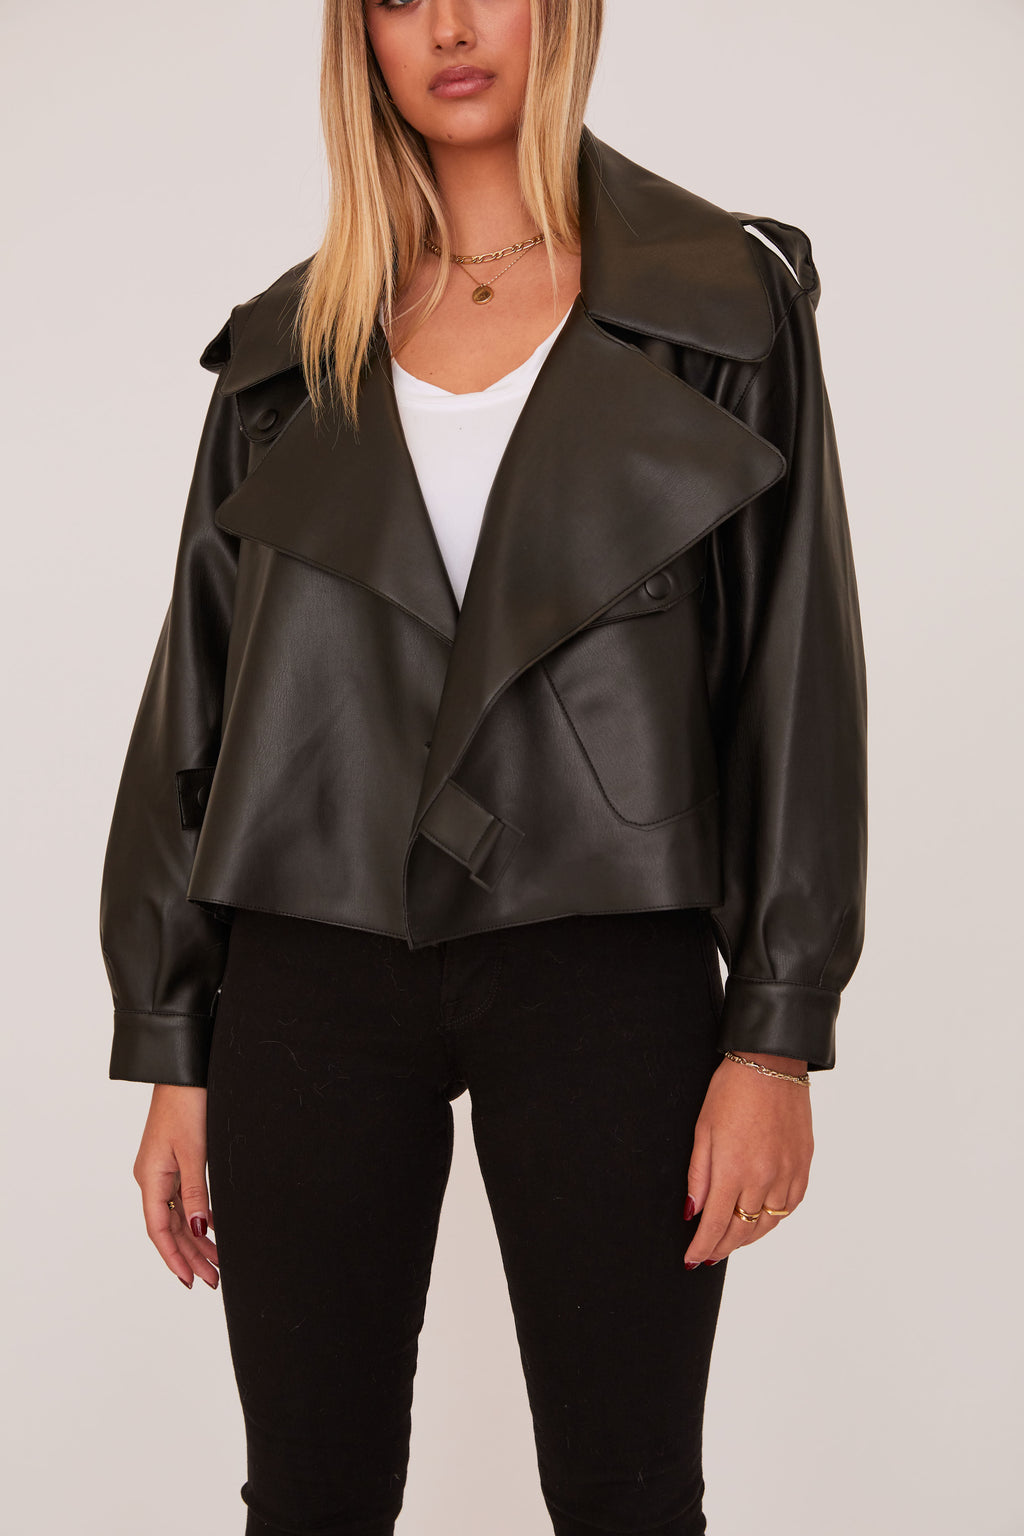 shaci matignon vegan black leather jacket